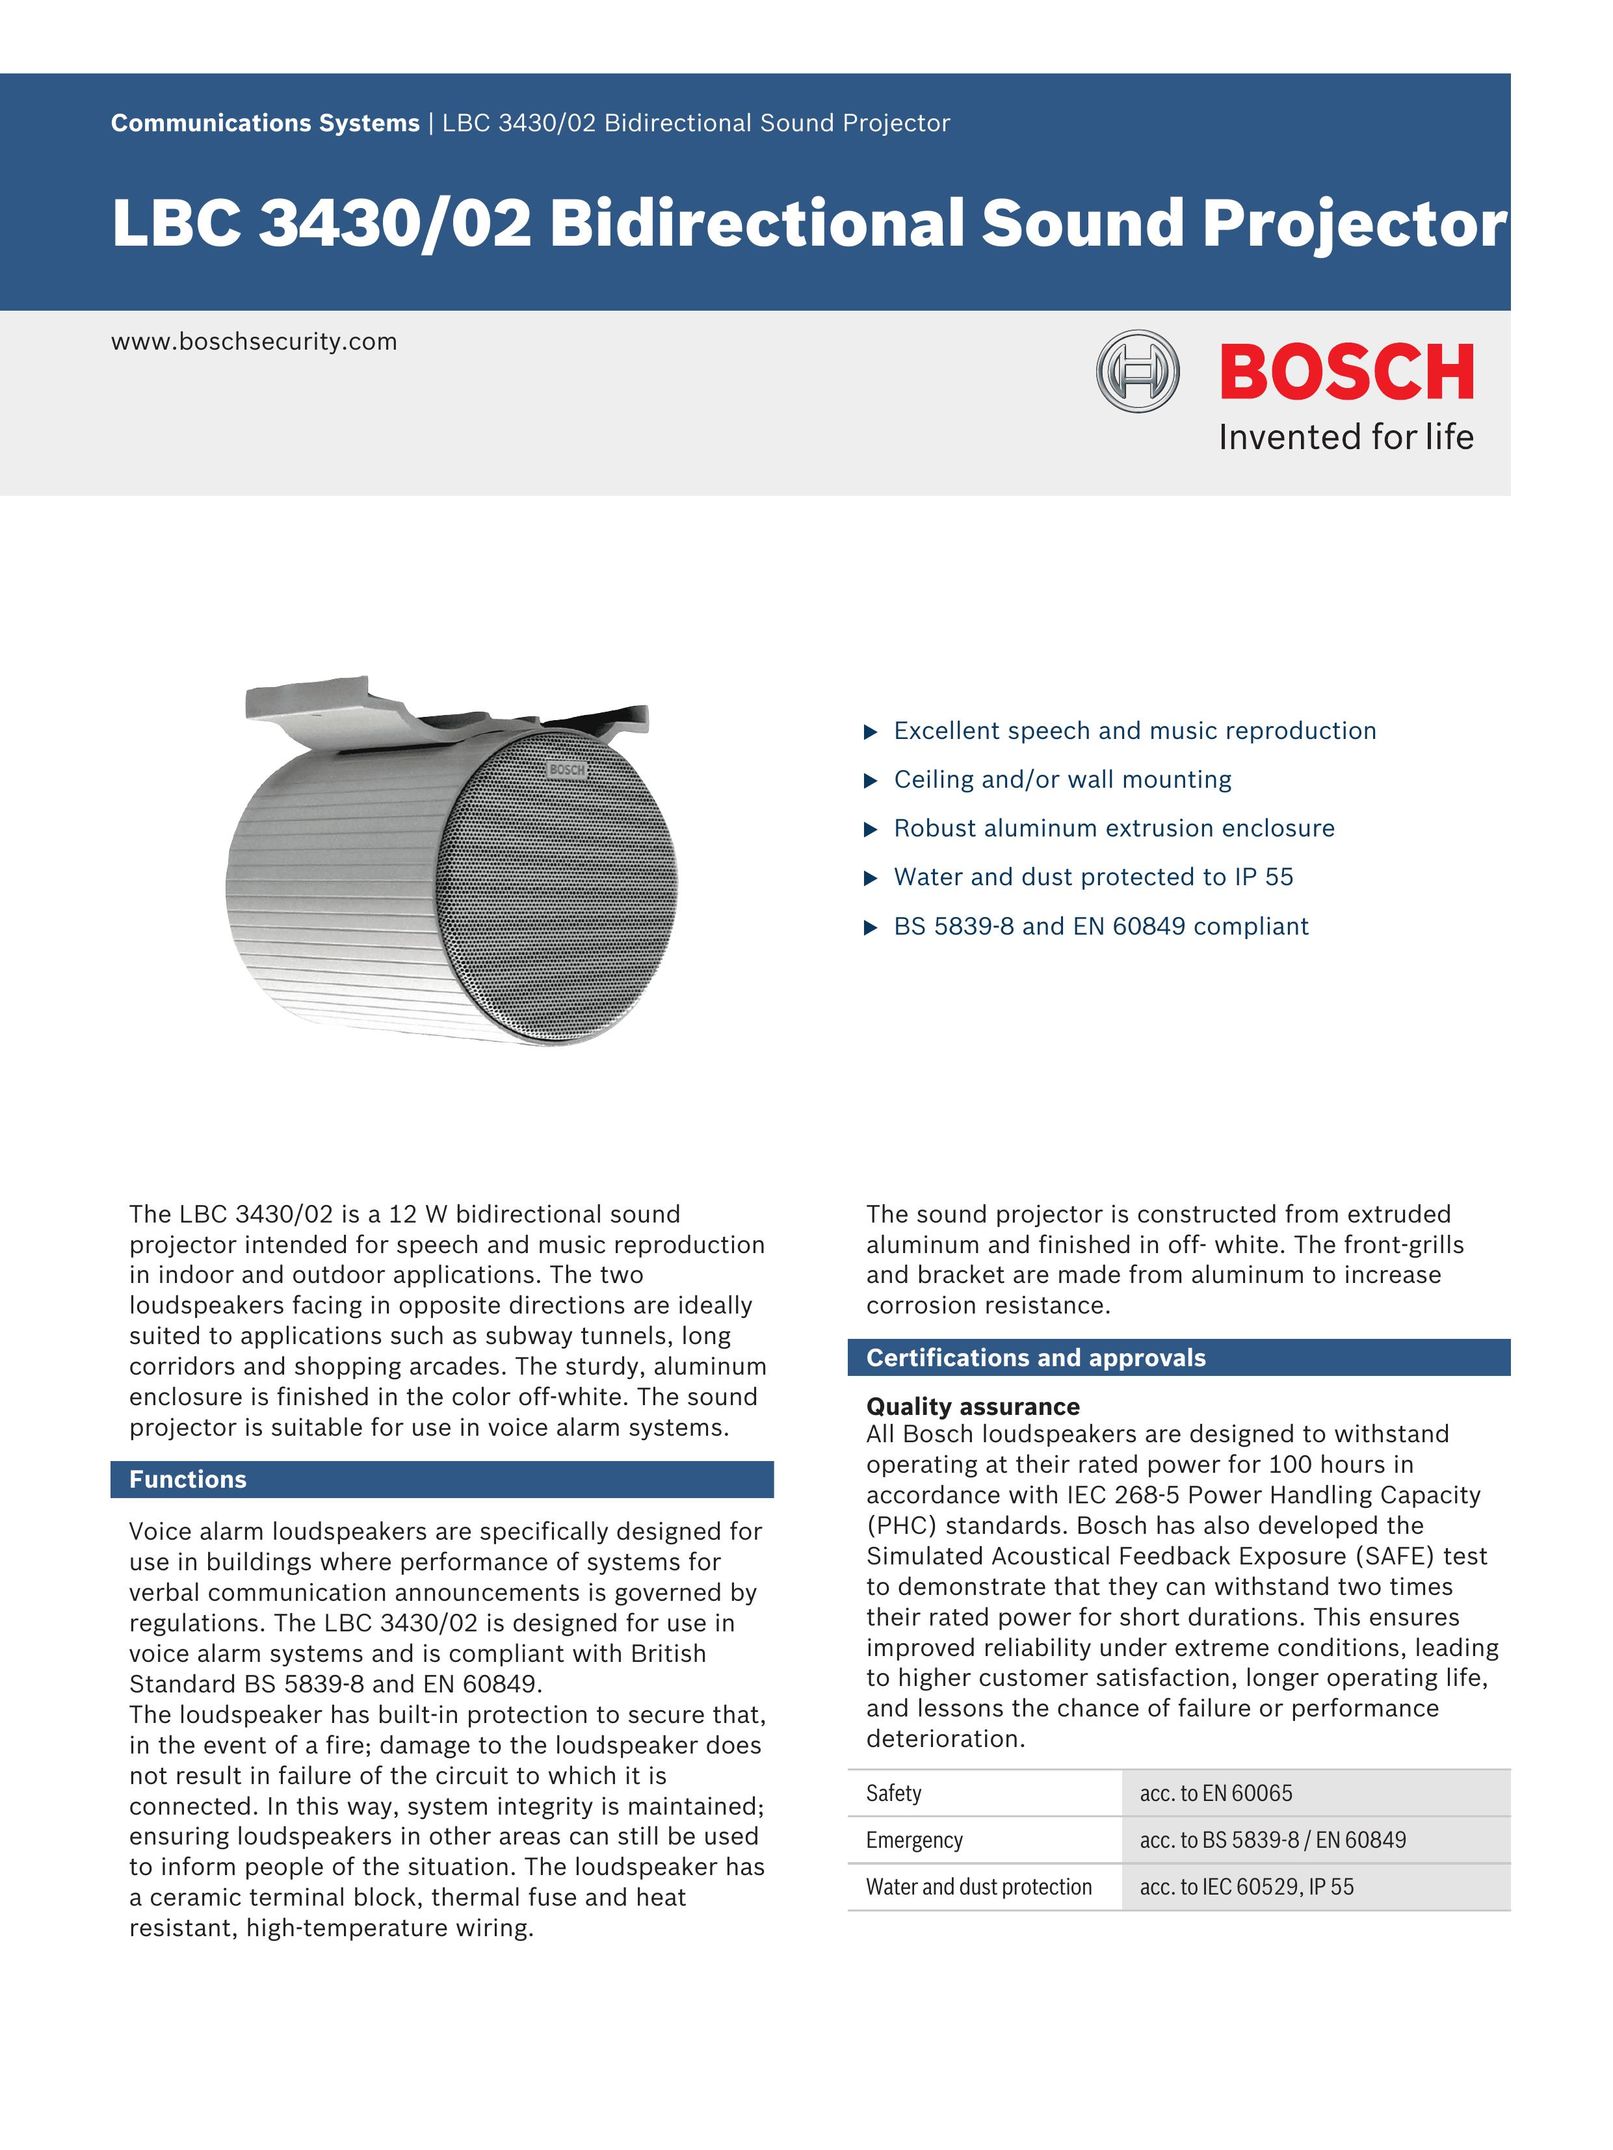 Bosch Appliances LBC 3430 2 Car Speaker User Manual (Page 1)